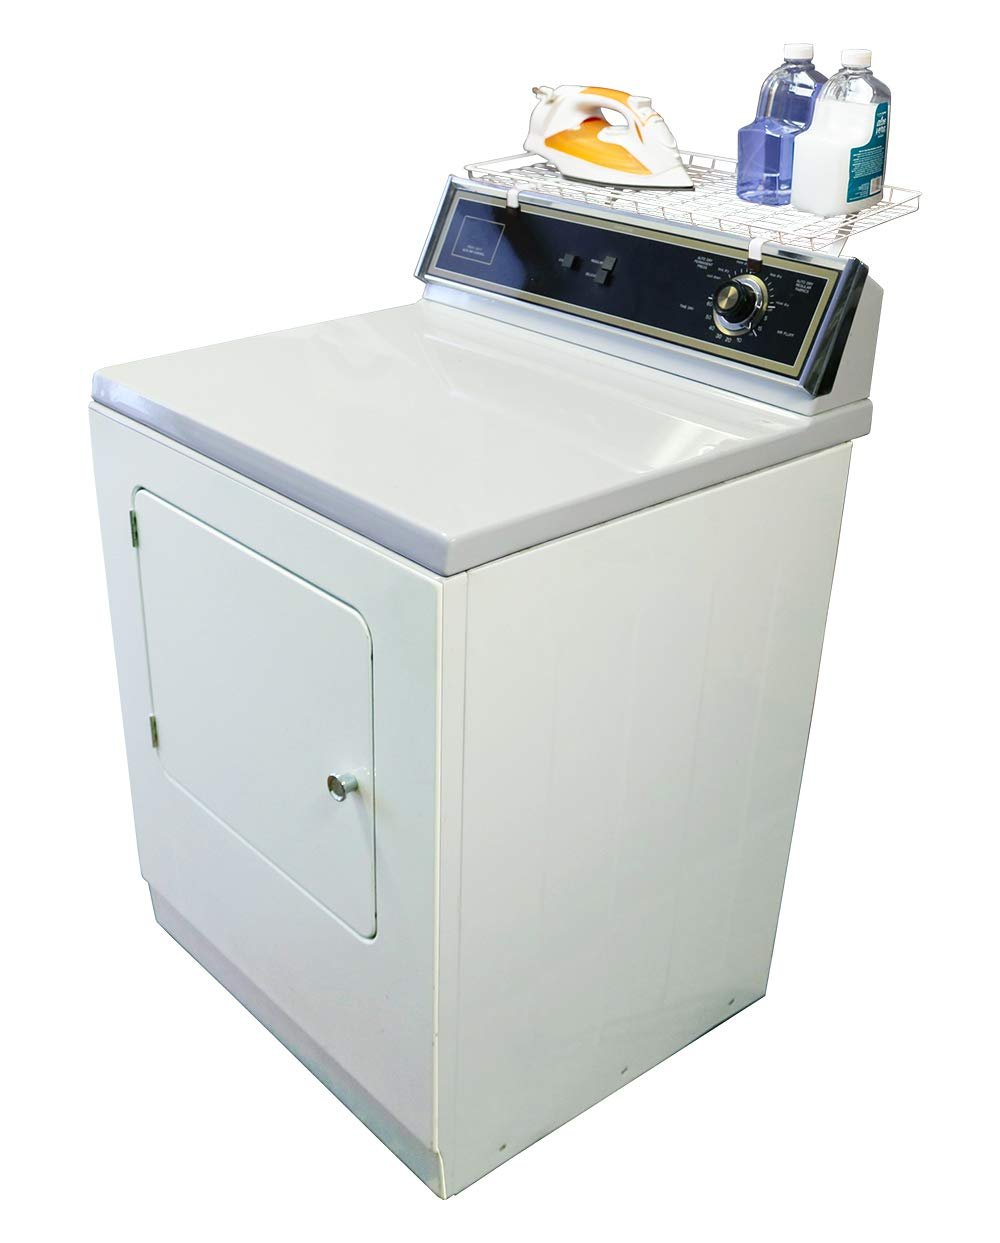 Home Basics Over The Washer and Dryer Laundry Storage Supplies Shelf, White eBay